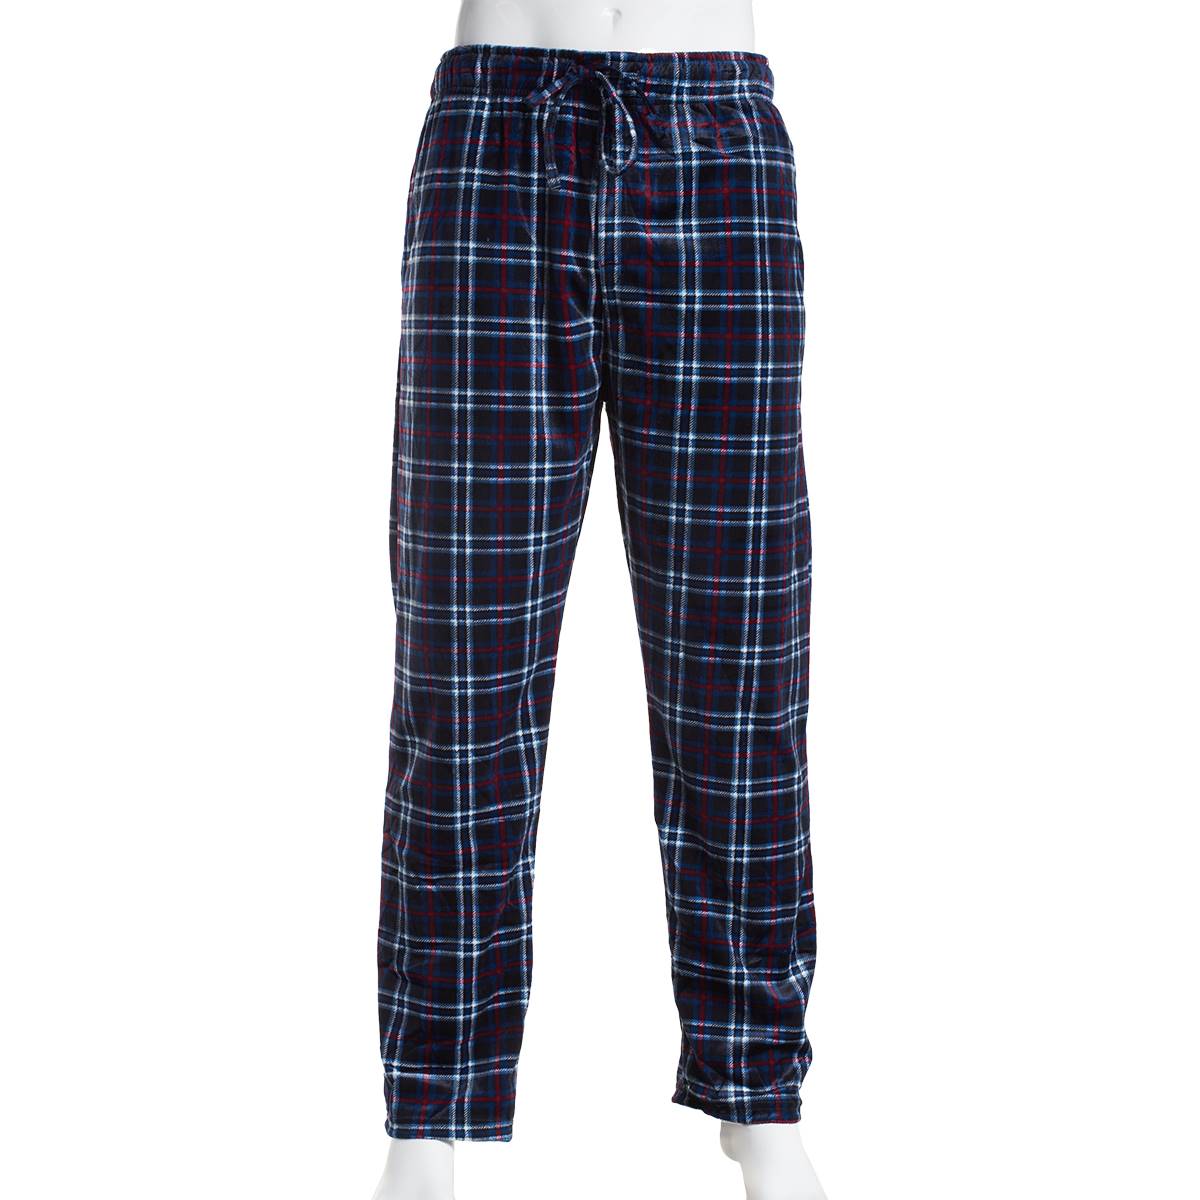 Mens Big & Tall Preswick & Moore Plaid Pajama Pants - Red/Navy